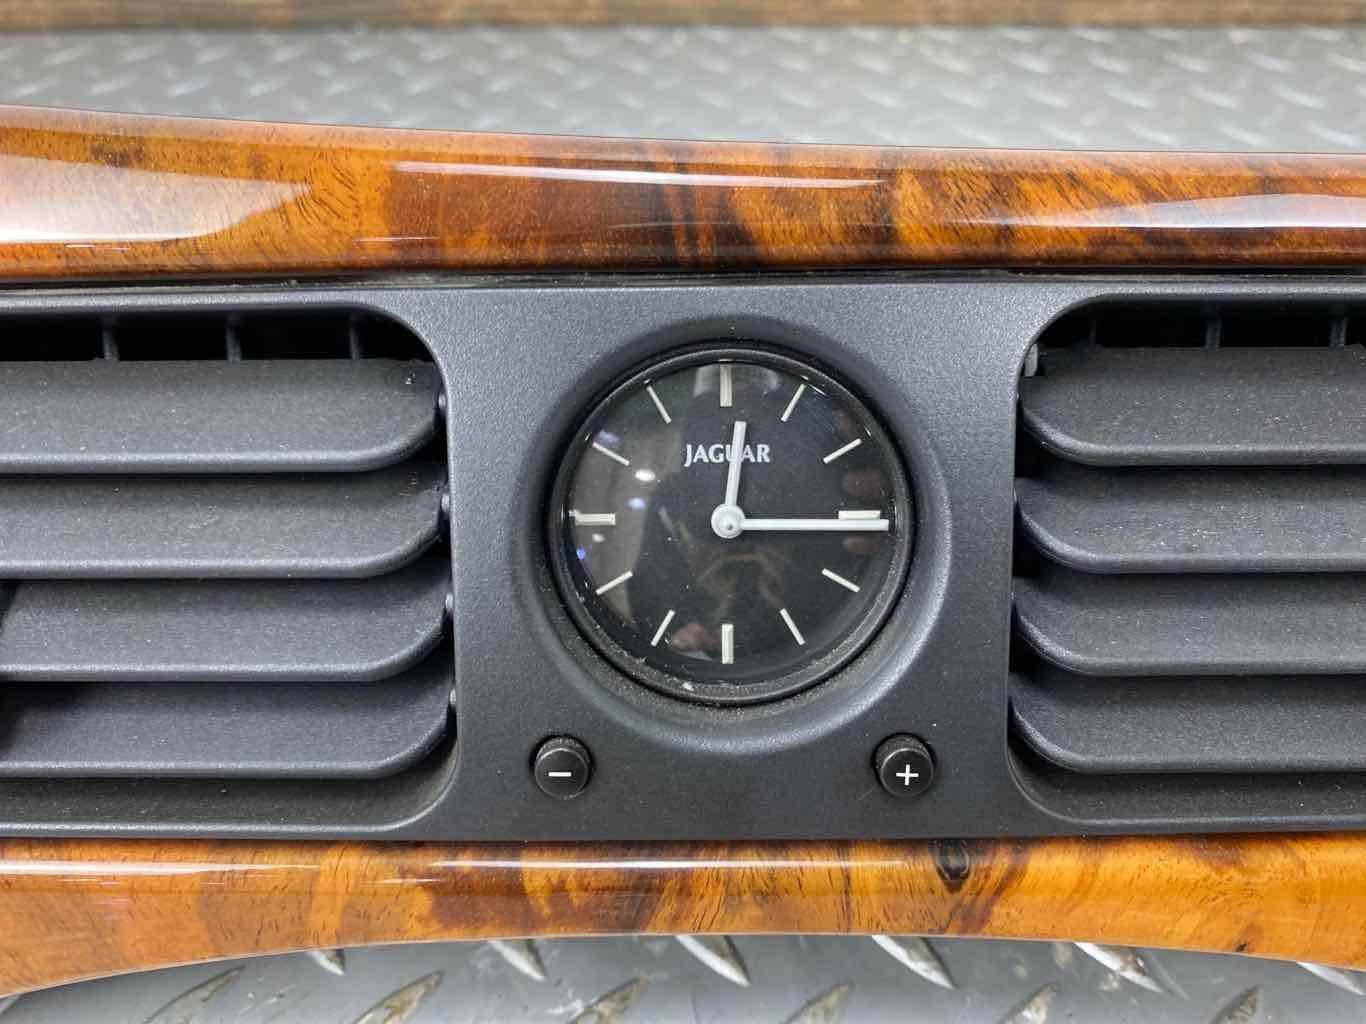 98-03 Jaguar XJ8 Interior Center Dash Mounted Clock W/ Vents & Woodgrain Bezel